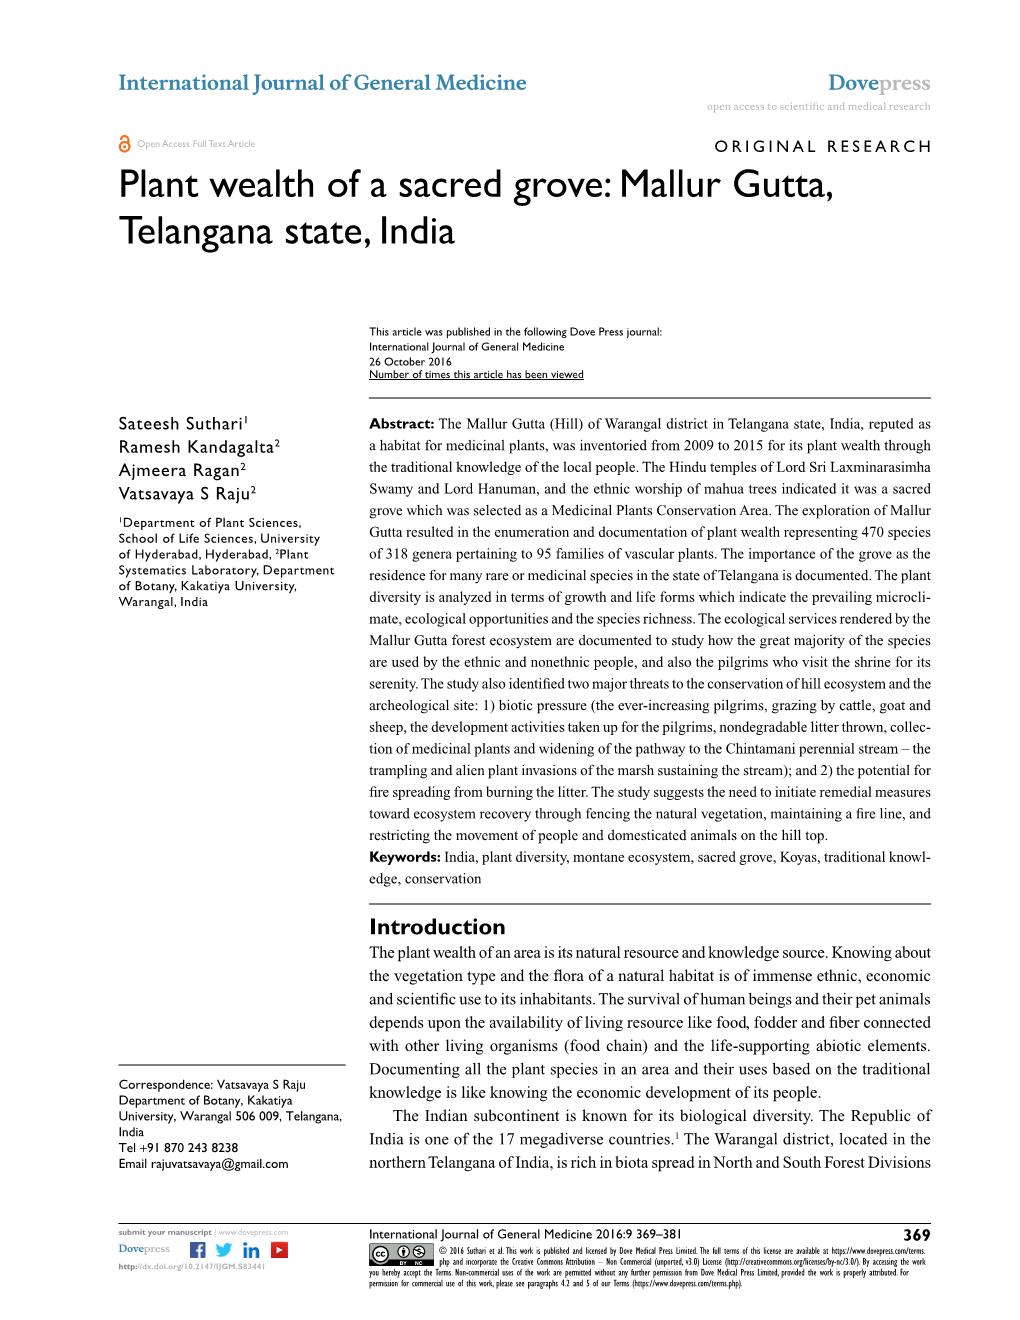 Plant Wealth of a Sacred Grove: Mallur Gutta, Telangana State, India